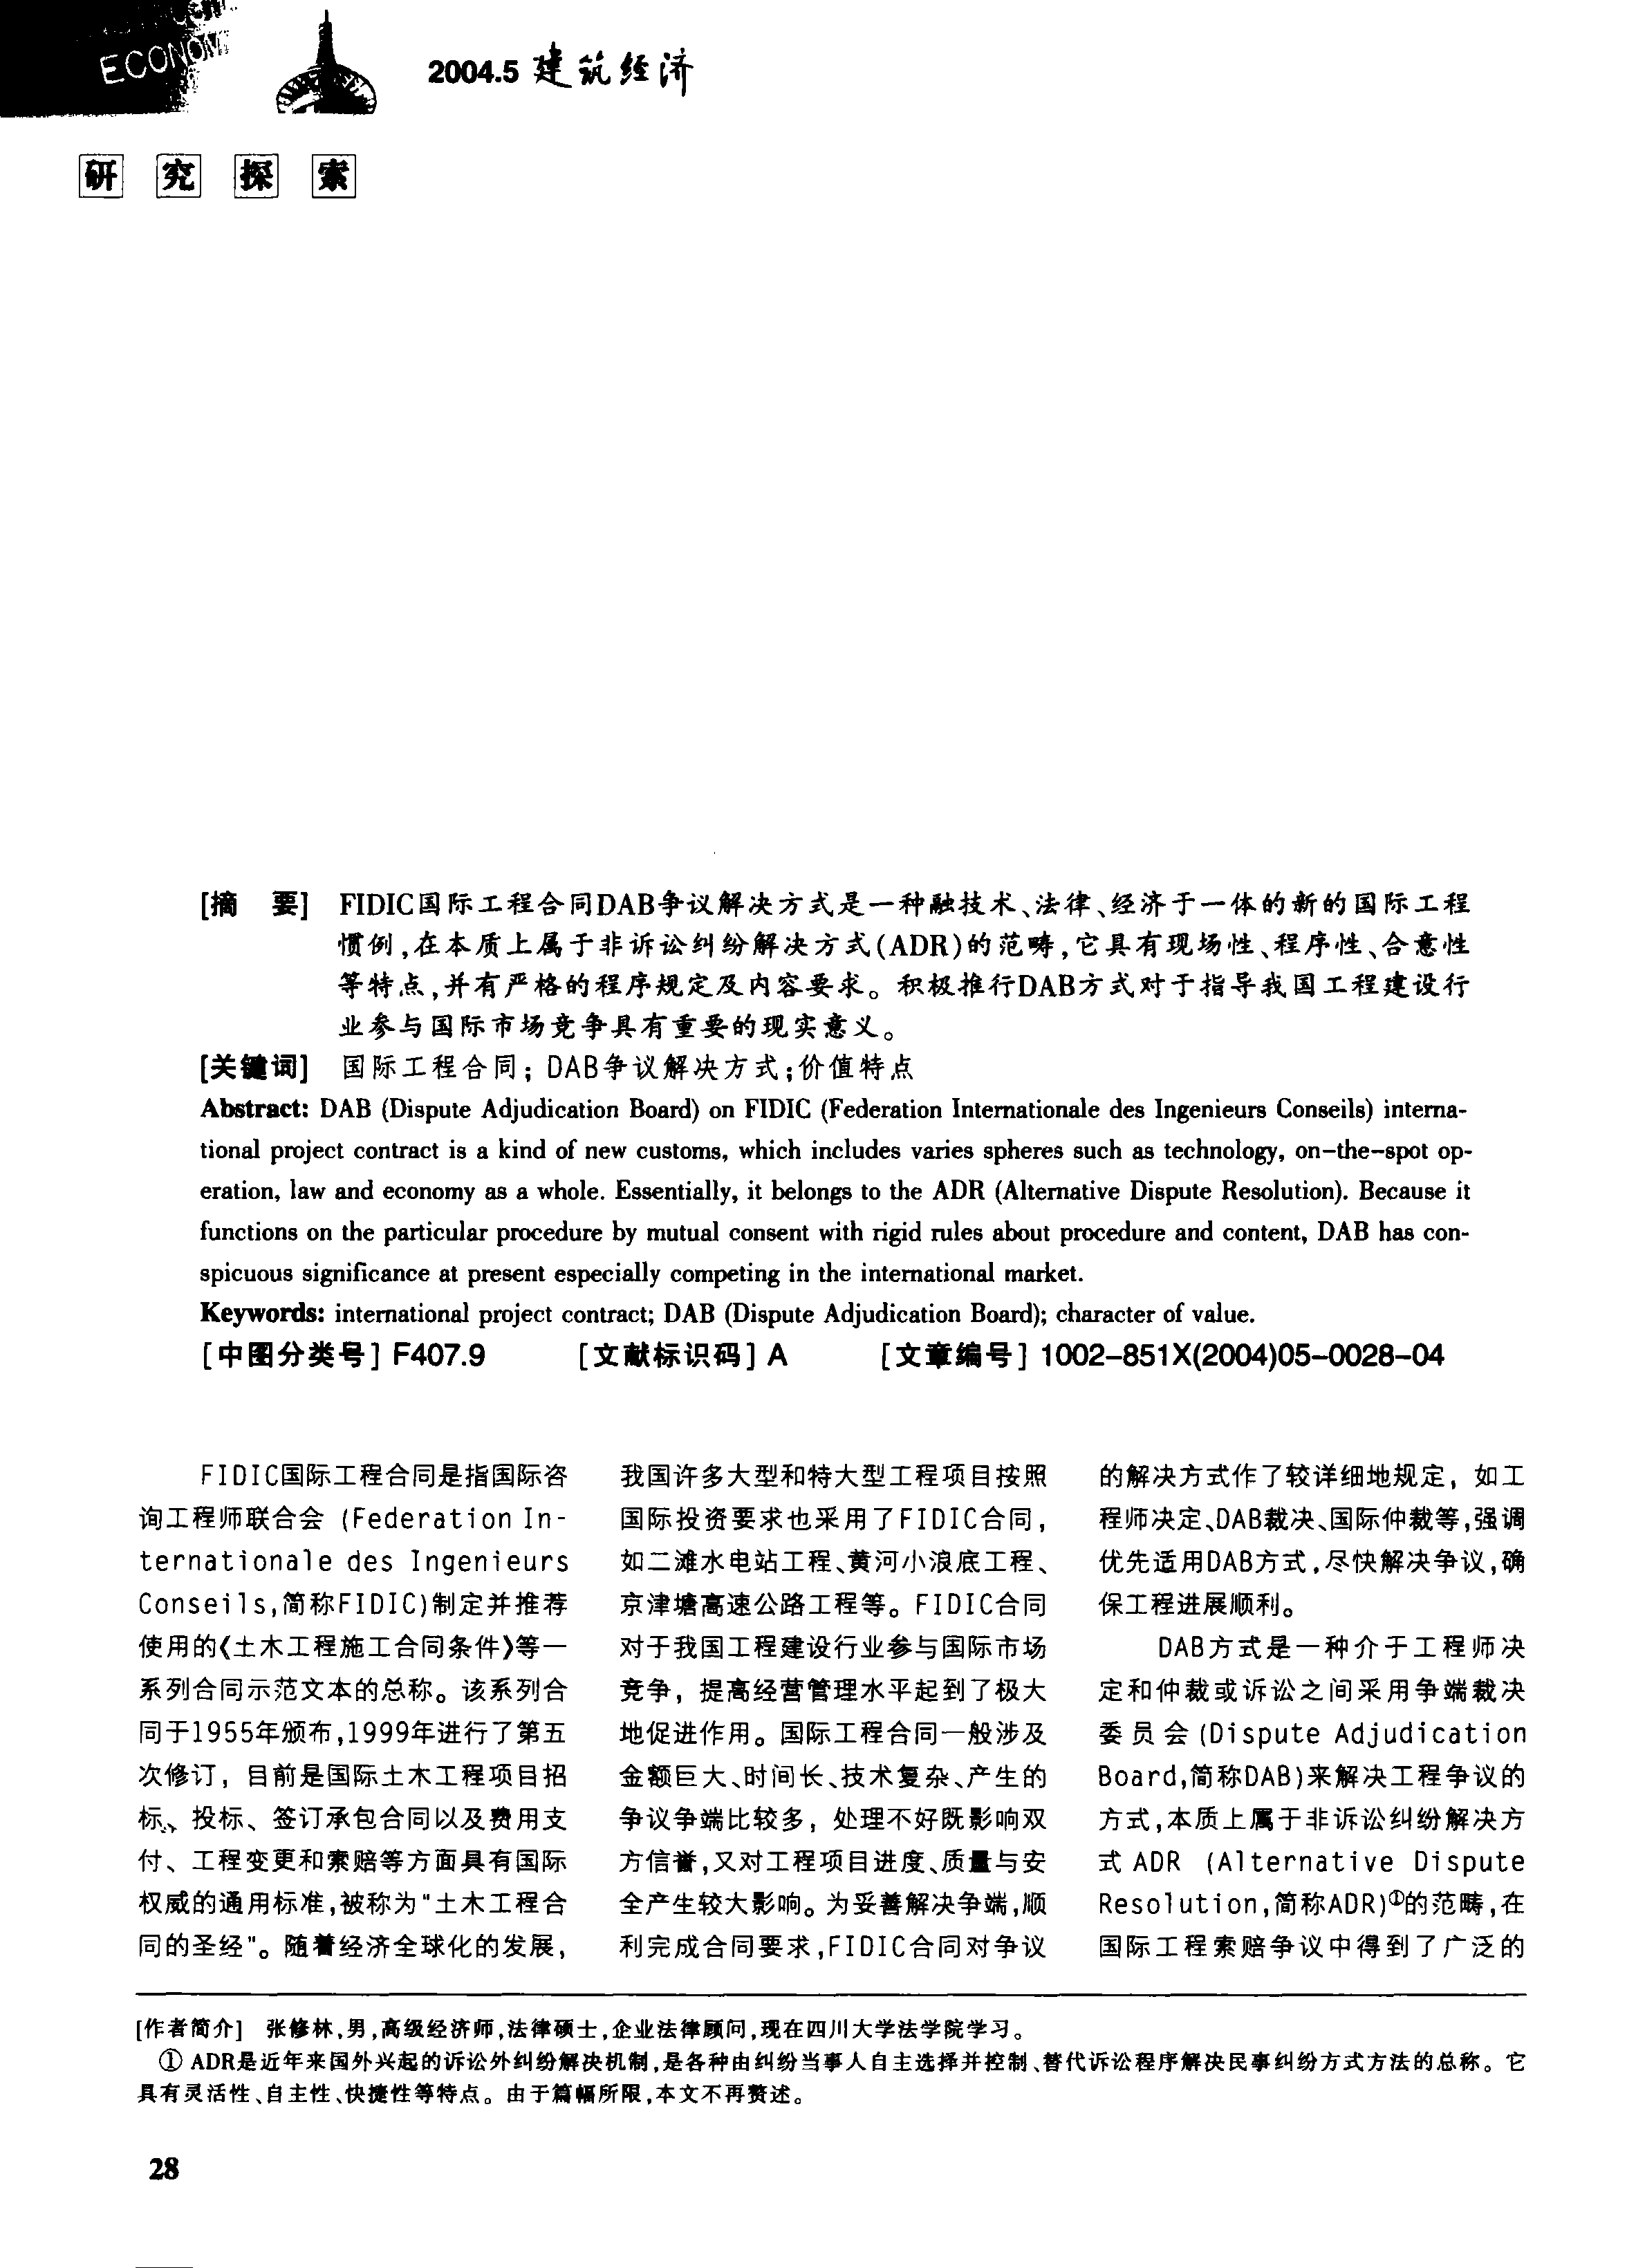 FIDIC国际工程合同DAB争议解决方式的探讨_张修林